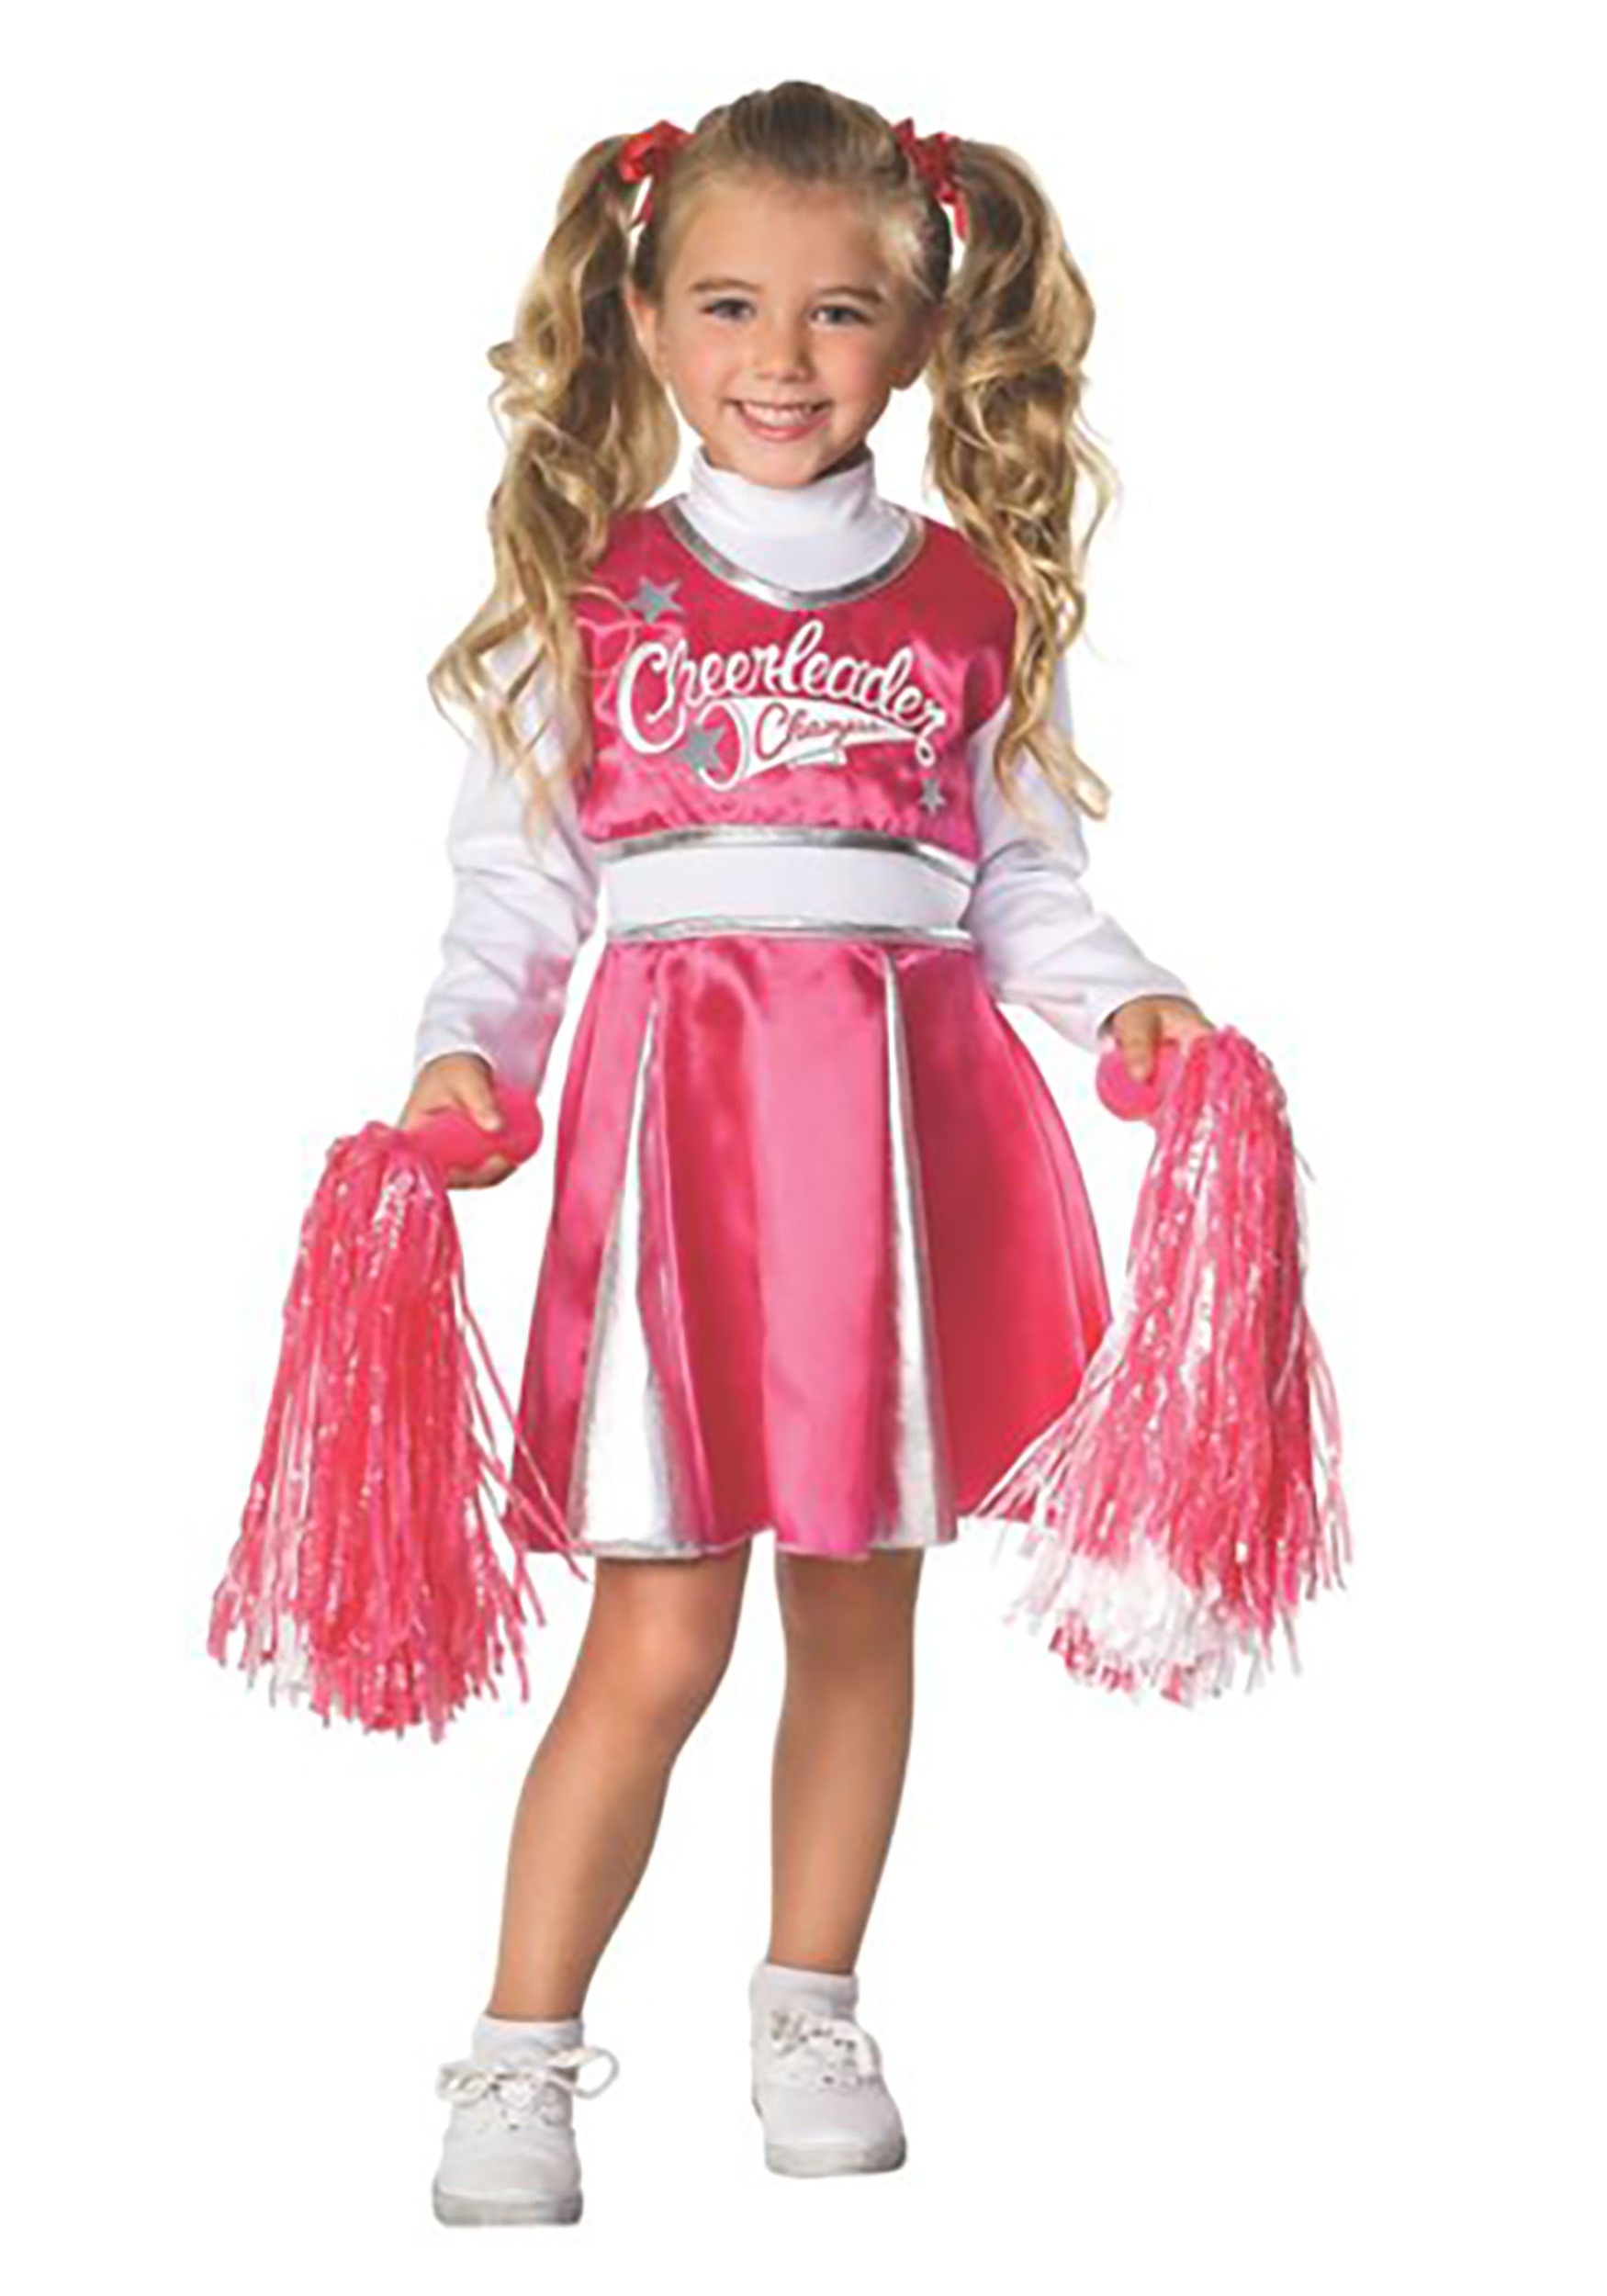 Cheerleader Champ Kid Costume